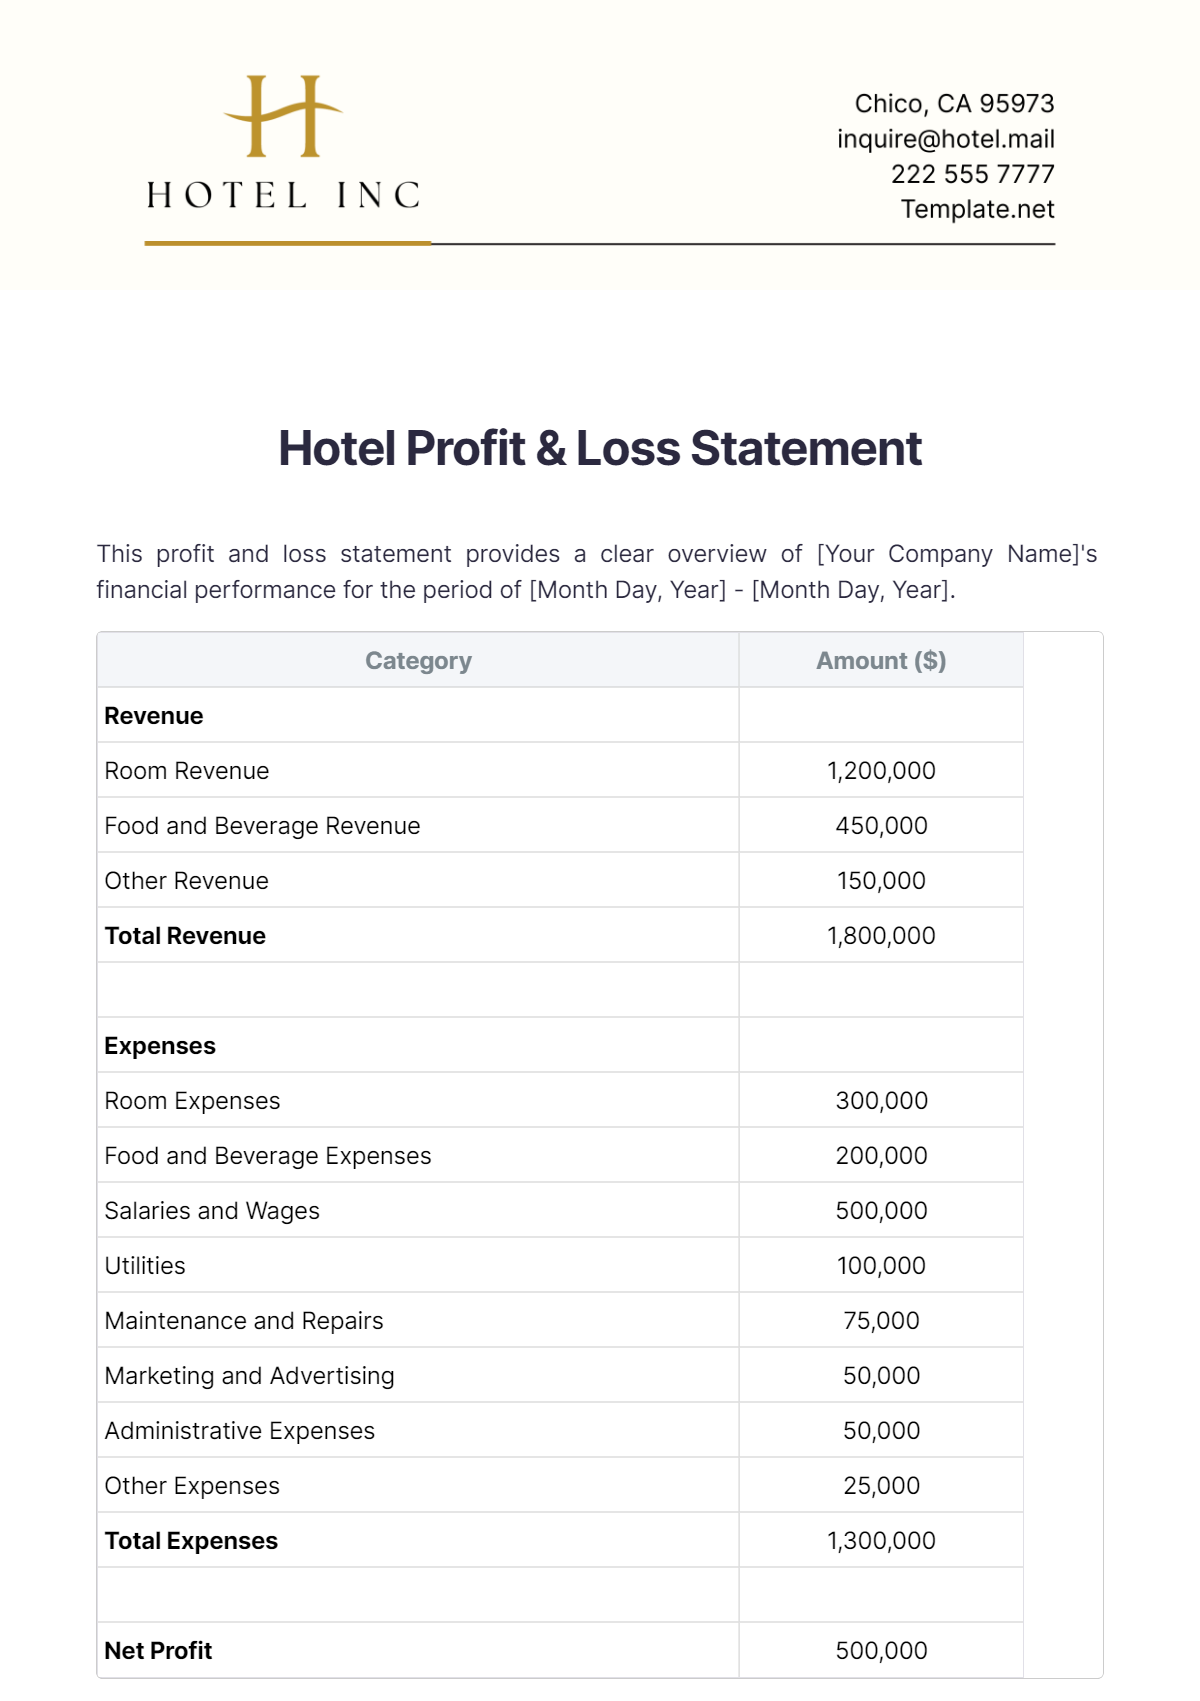 Free Hotel Profit & Loss Statement Template